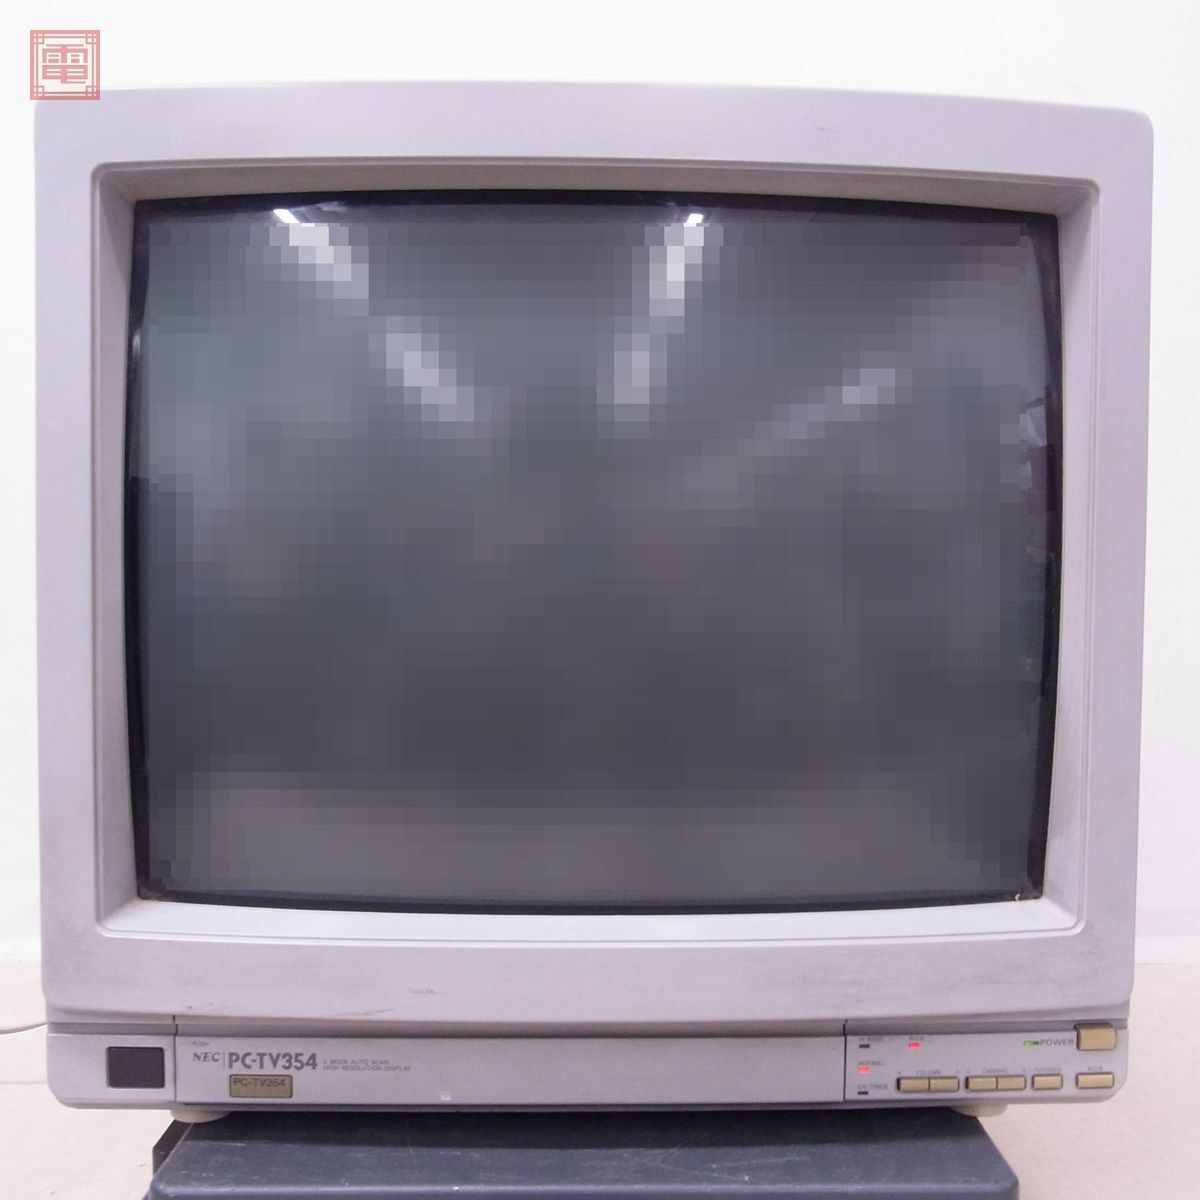 X68000/MSX etc. Brown tube monitor NEC PC-TV354 Japan electric analogue RGB/21 pin RGB/ video Junk parts taking .. please [40